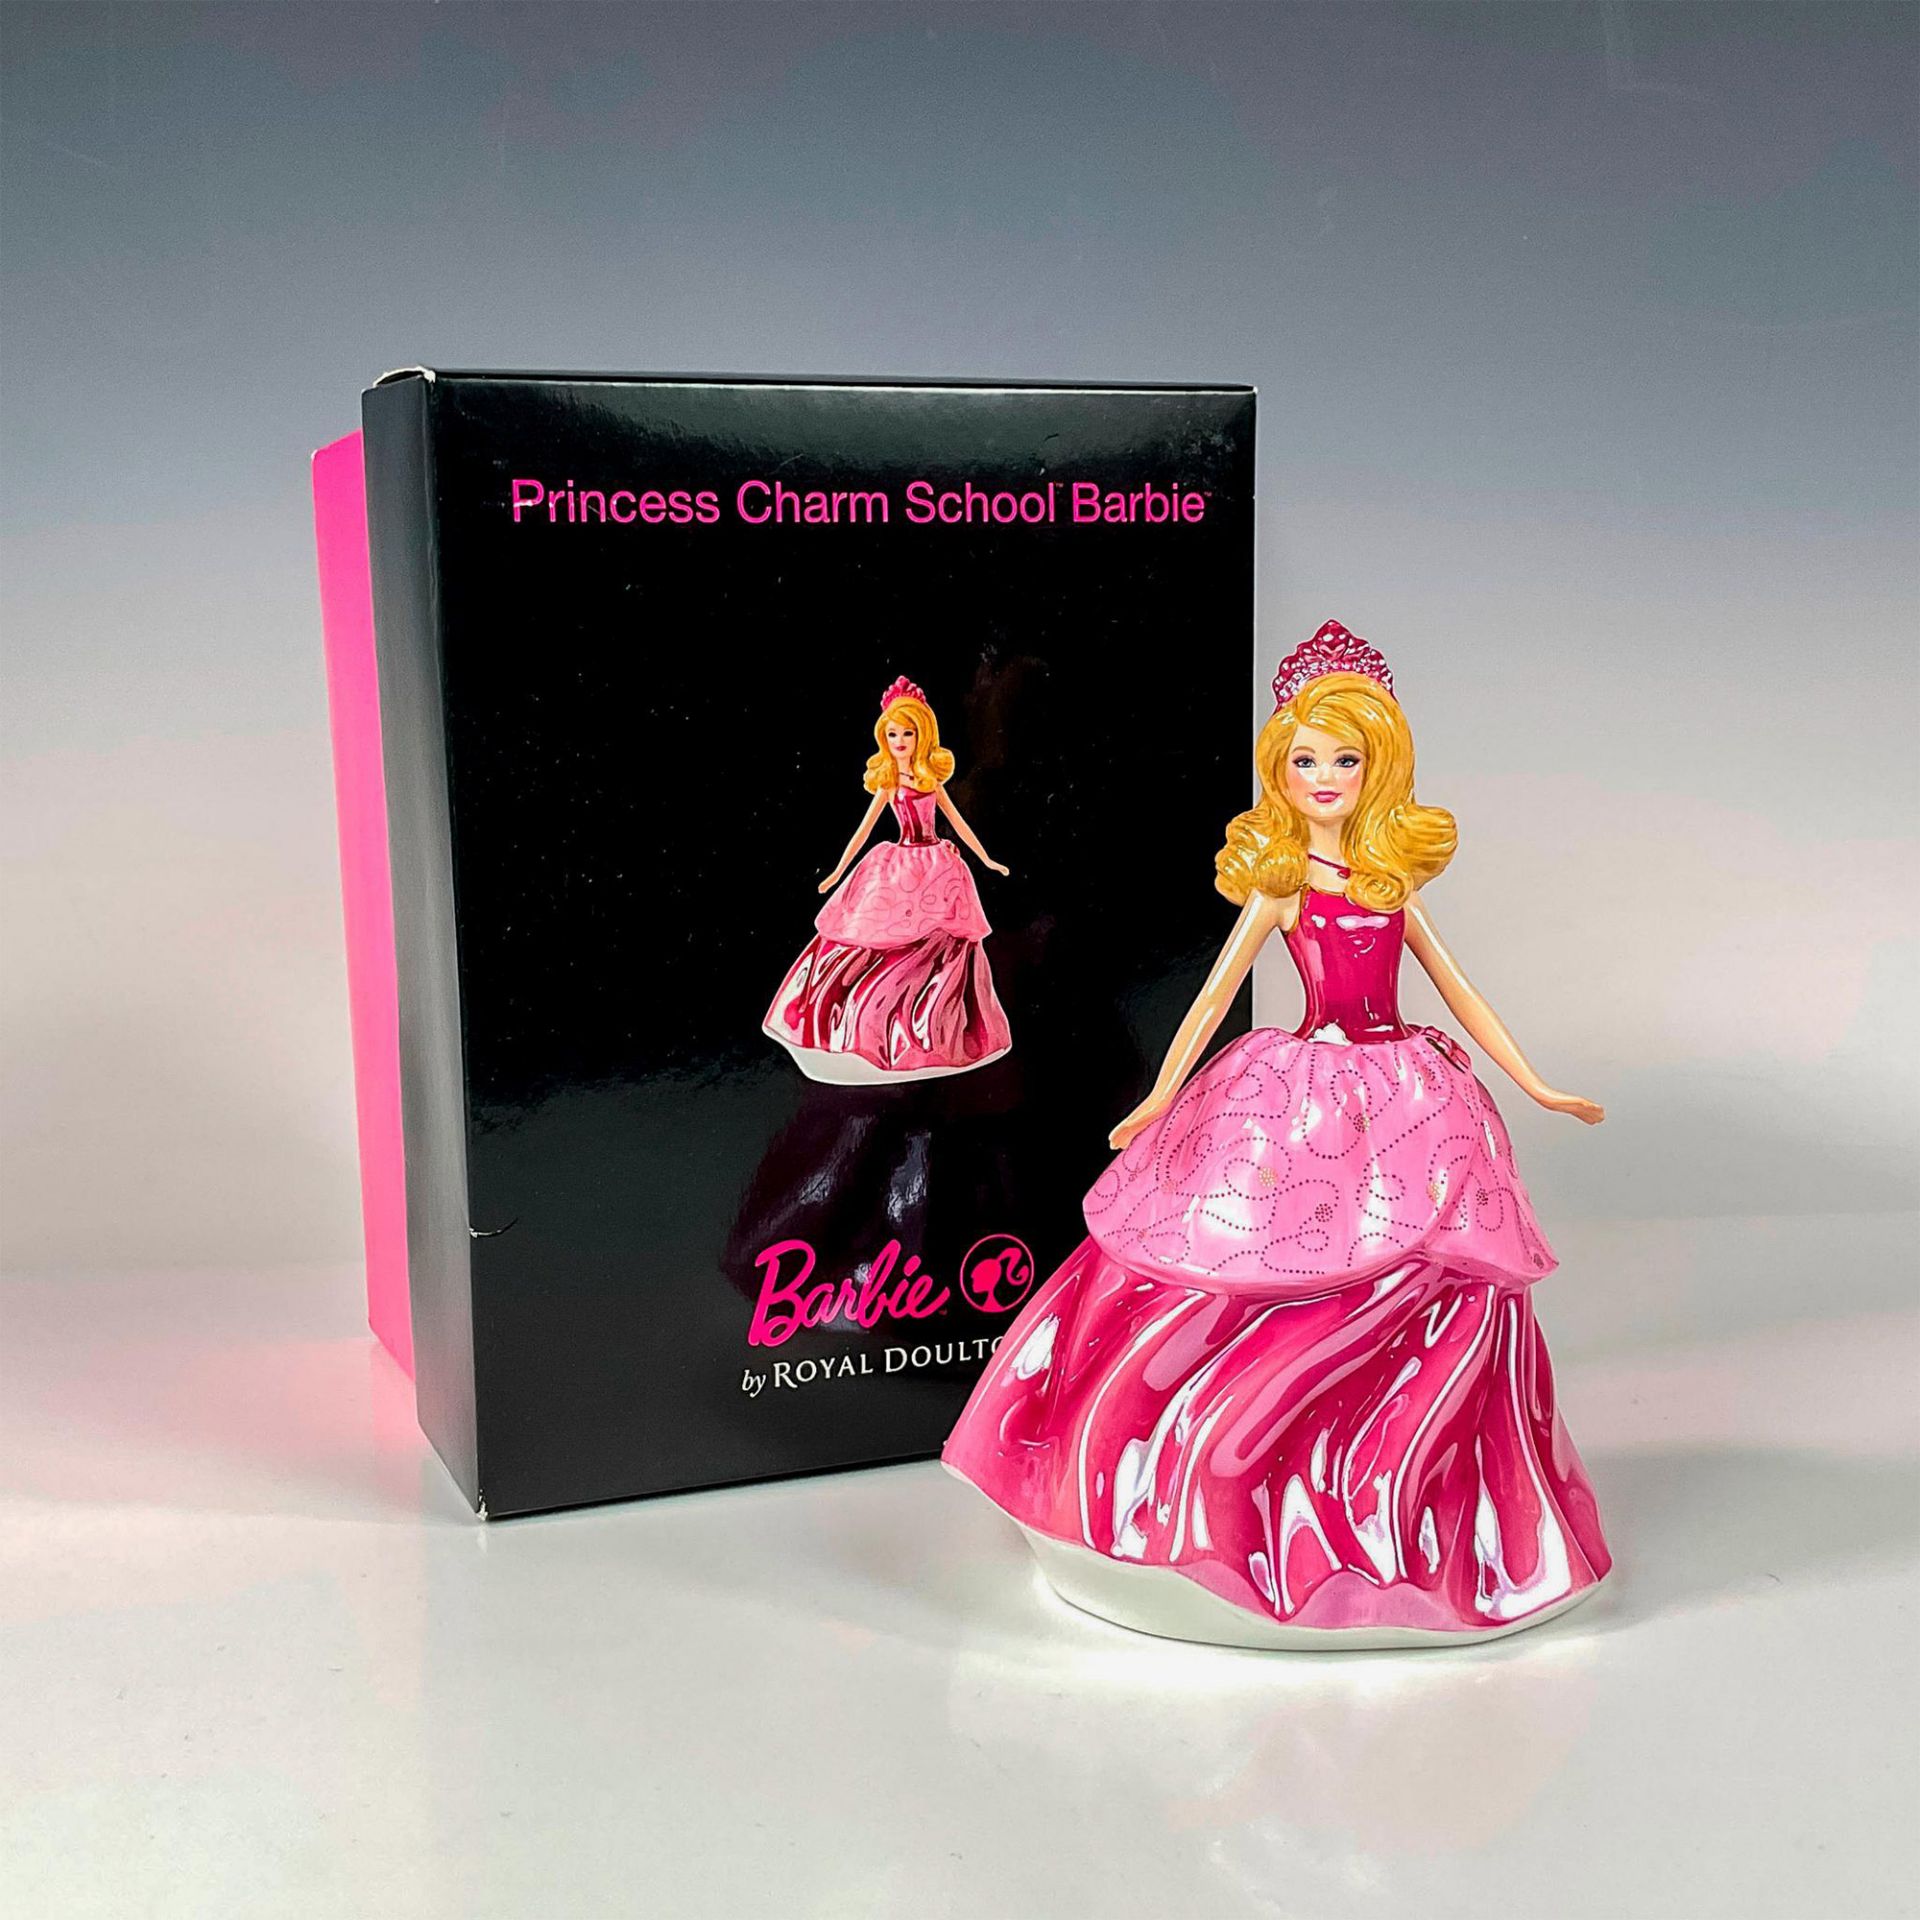 Barbie Princess Charm School HN5610 - Royal Doulton Figurine - Image 3 of 3